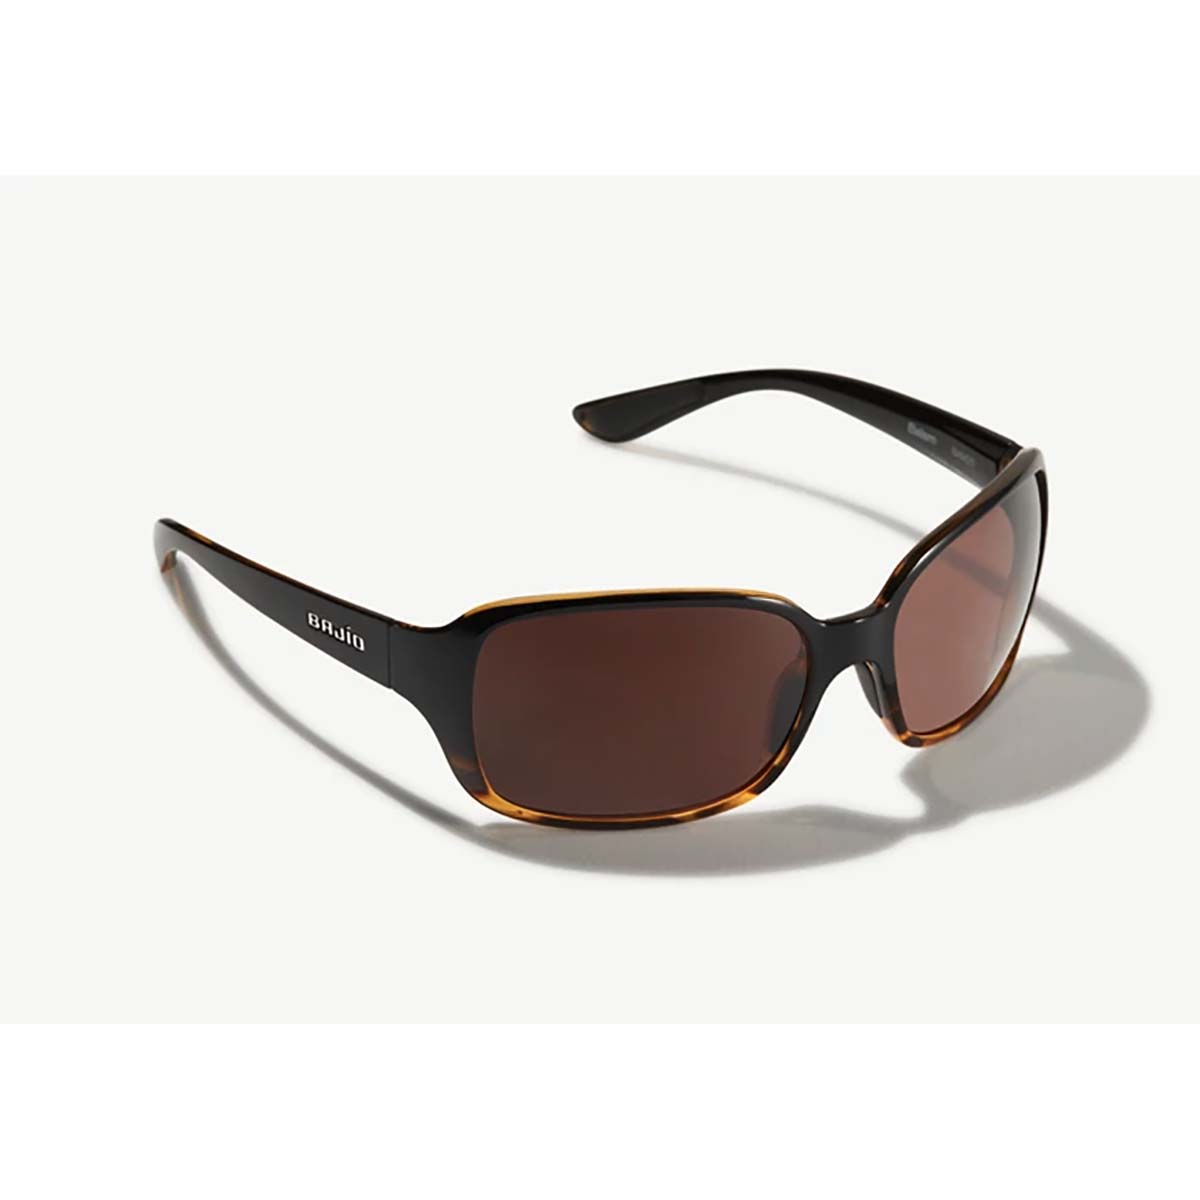 Bajio Balam Sunglasses Polarized in Black and Tortoise Split Gloss with Copper Plastic